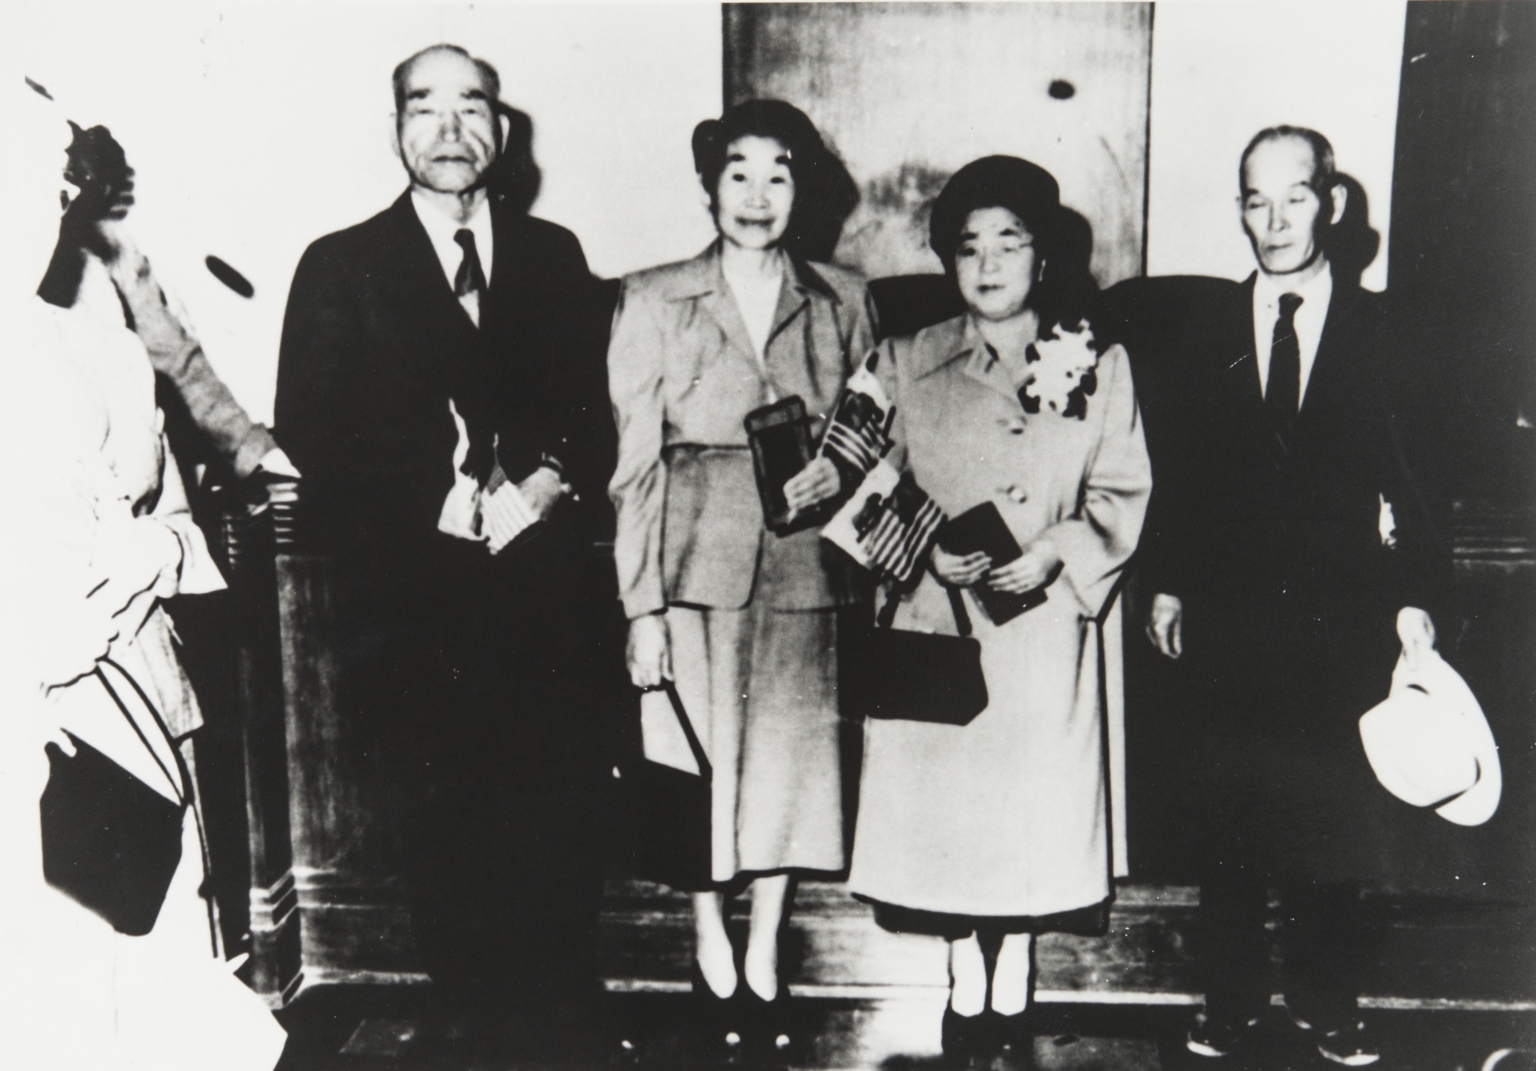 After becoming citizens of the United States. L-R: Mr. Tameji Eto, Mrs. Take Eto, Mrs. Toyo Hayashi.